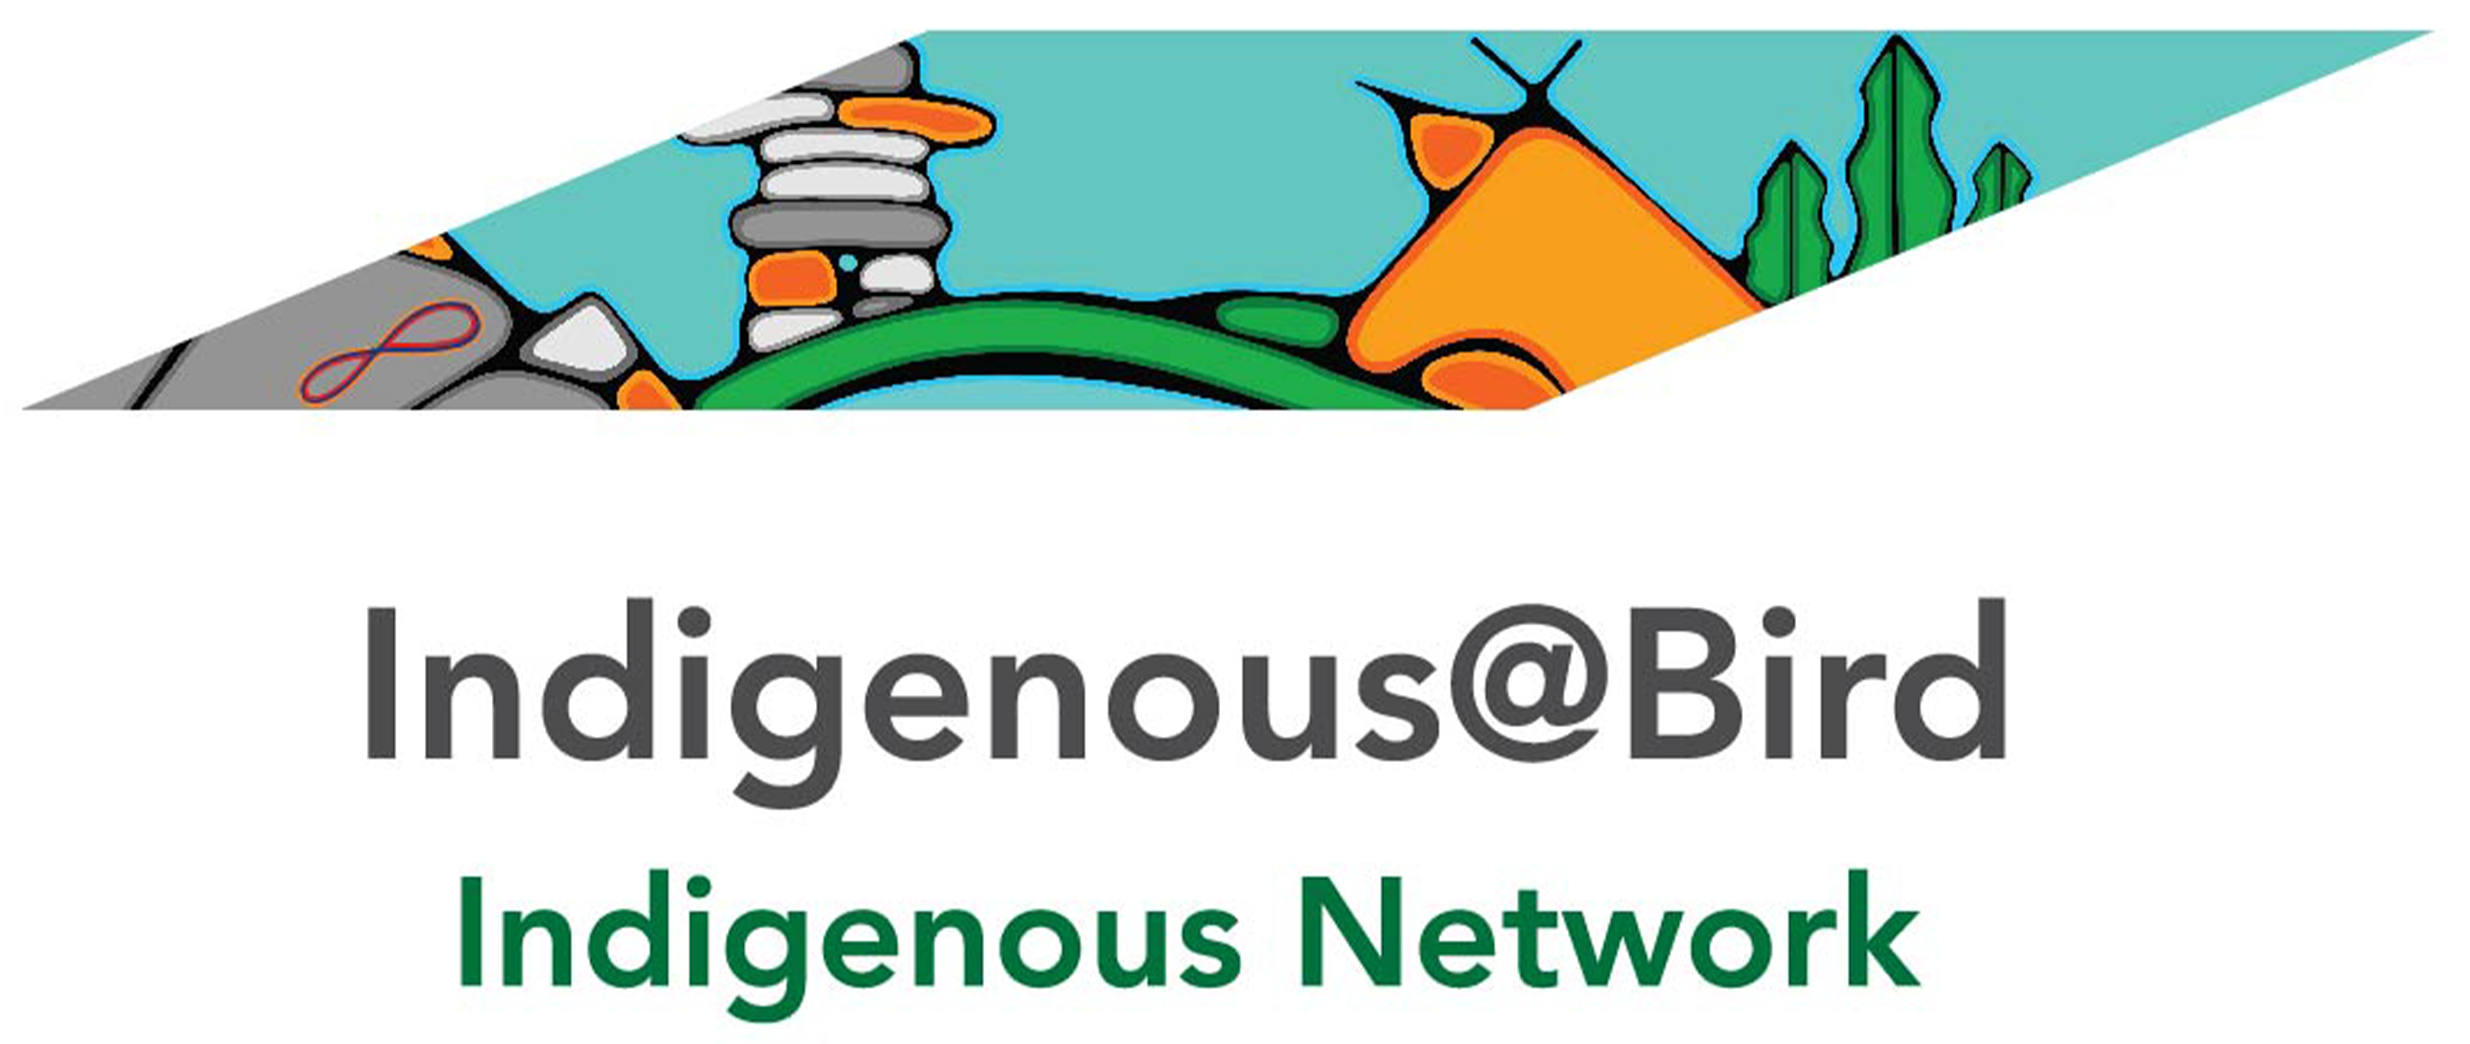 Indigenous@Bird logo